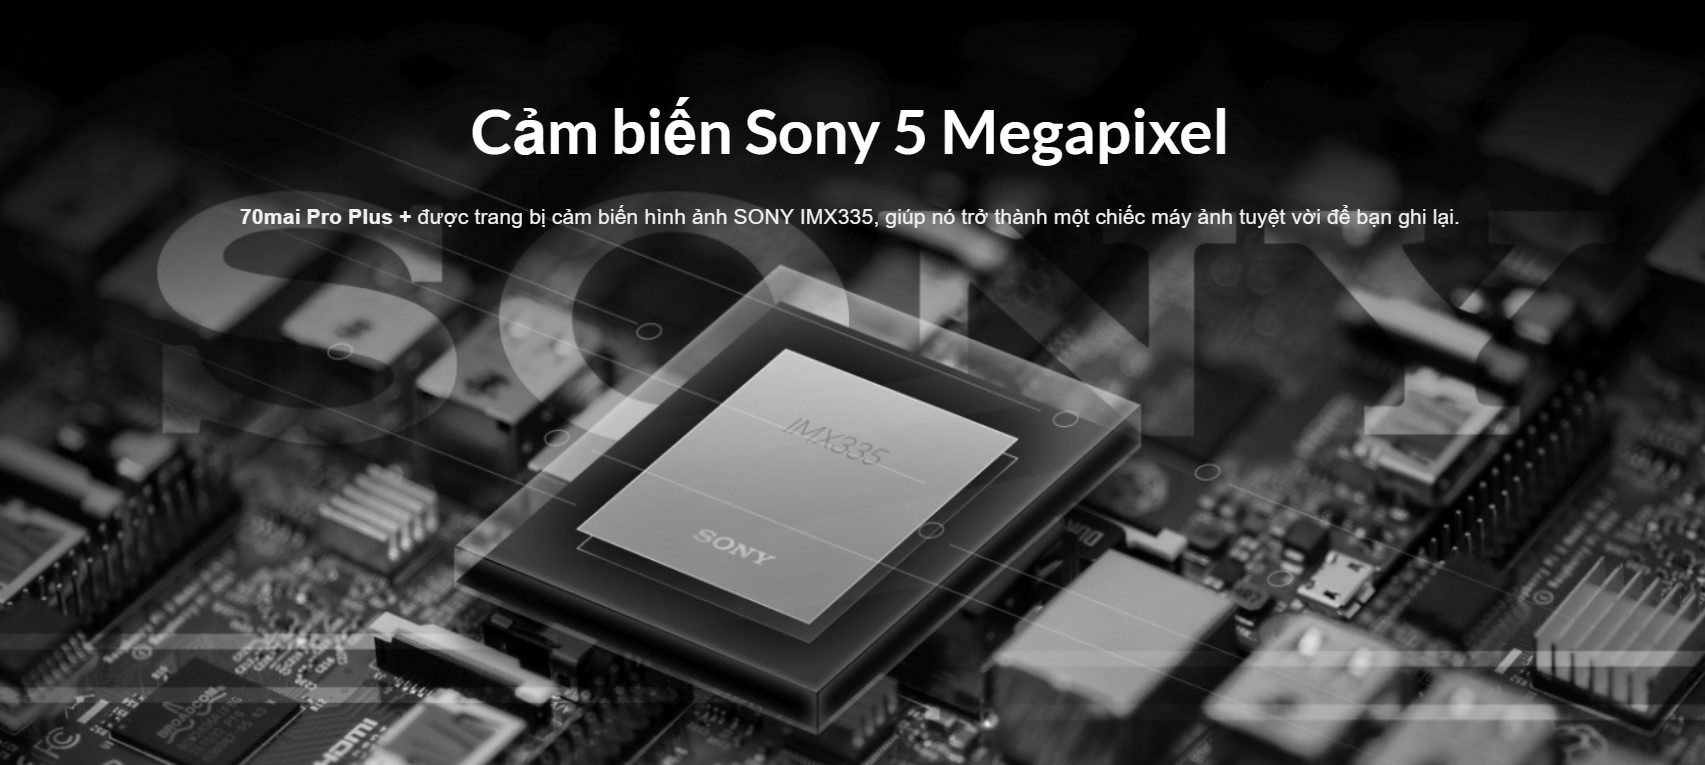 Cảm biến Sony 5 Megapixel của 70mai a500s